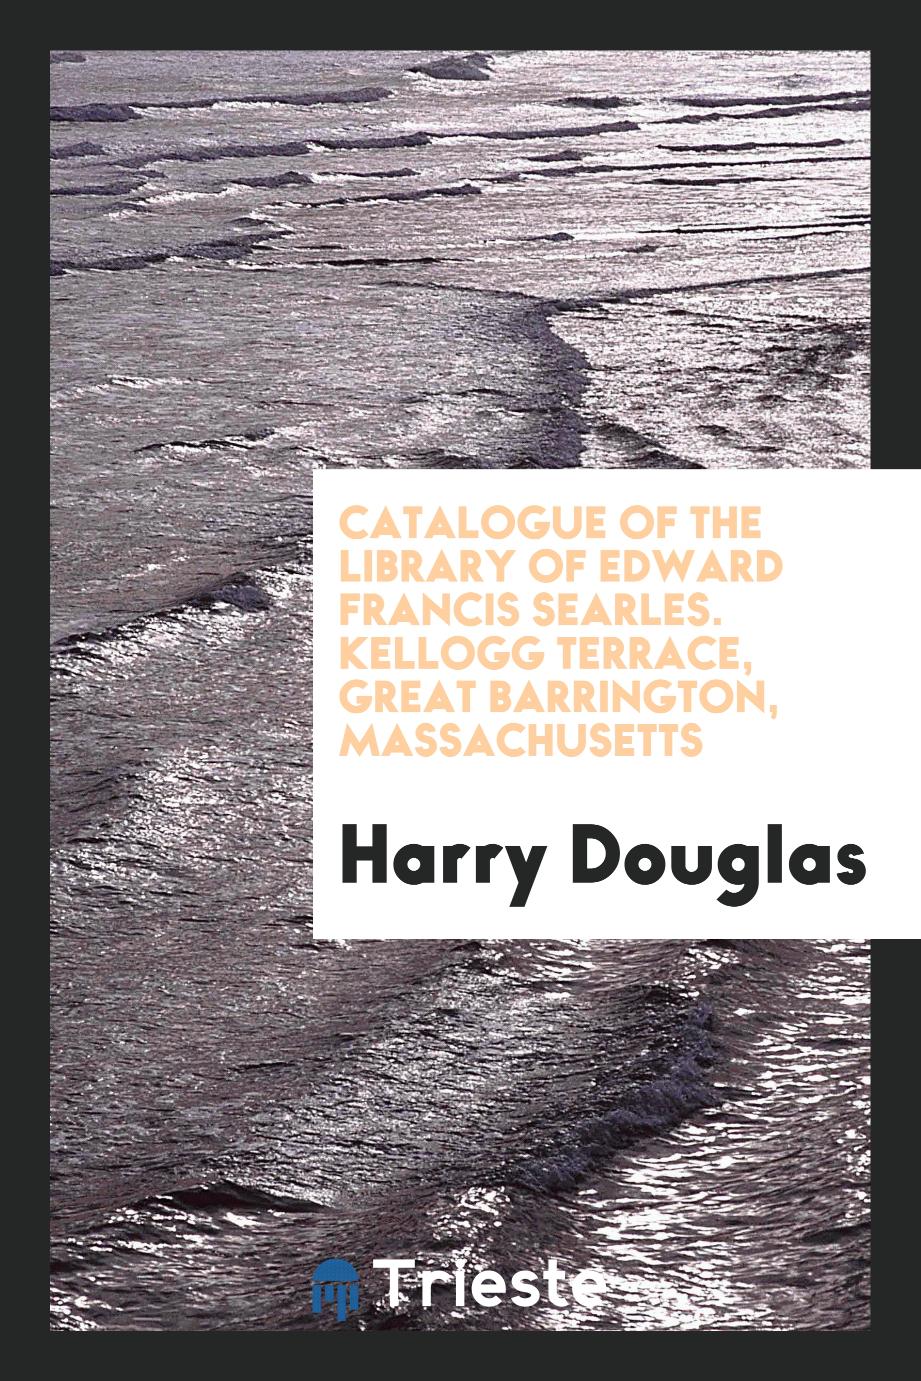 Catalogue of the Library of Edward Francis Searles. Kellogg Terrace, Great Barrington, Massachusetts